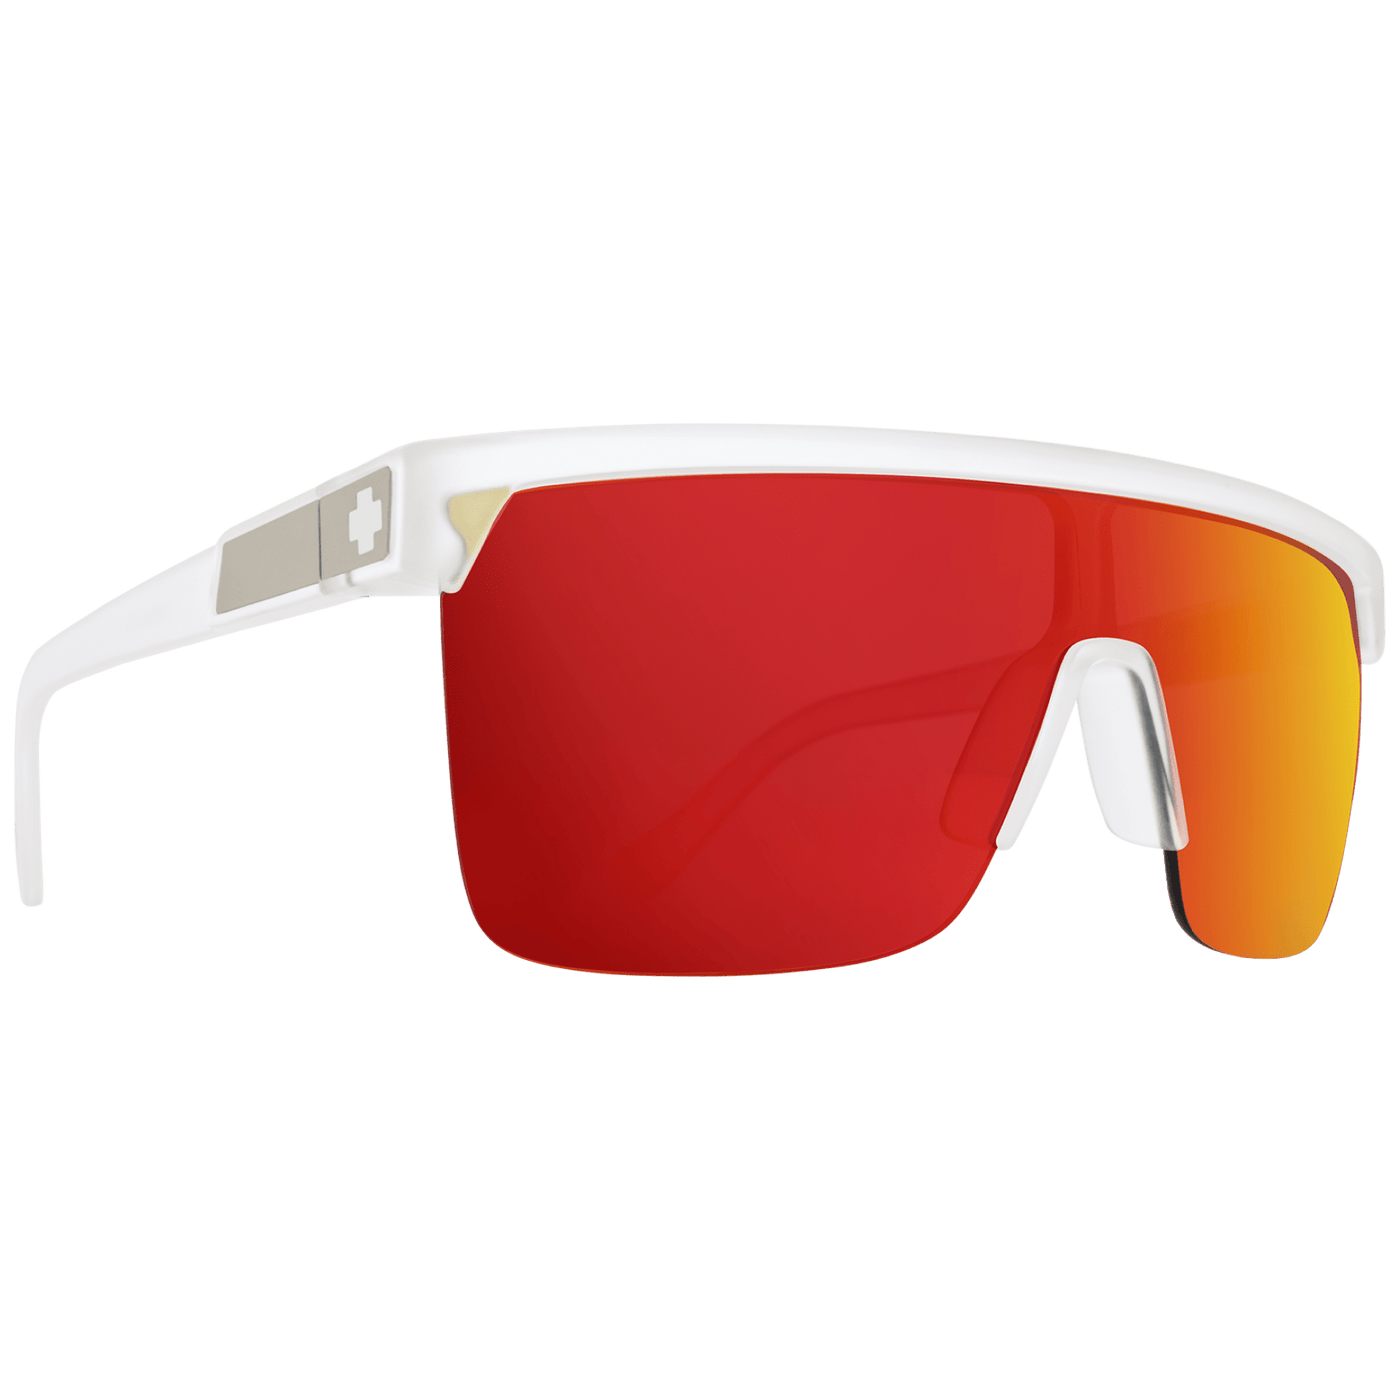 SPY FLYNN 5050 Sunglasses, Happy Lens - Red